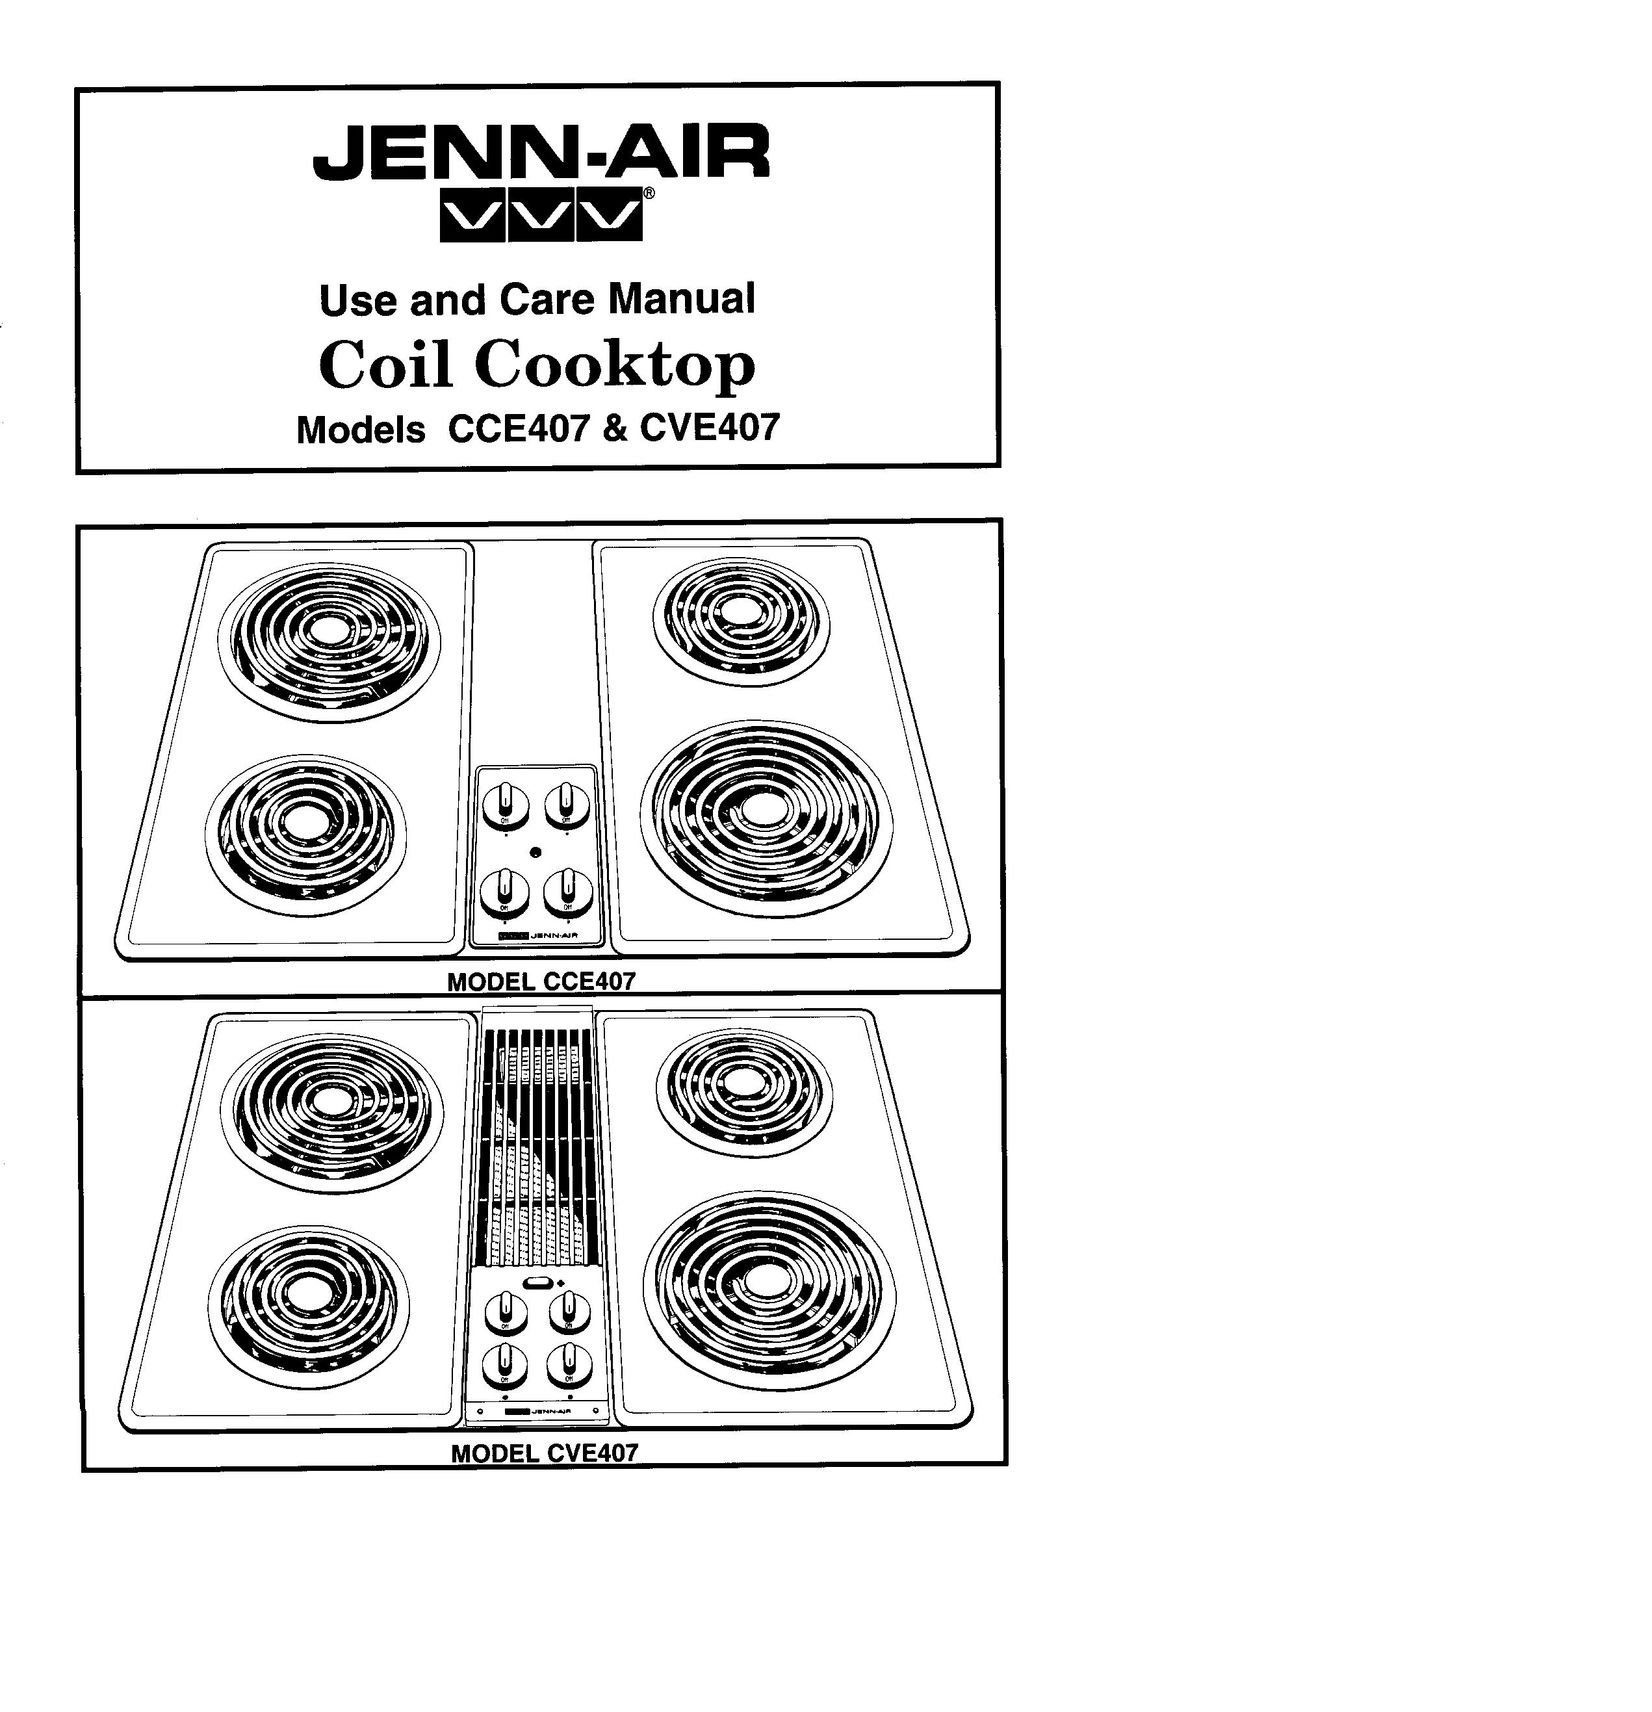 Jenn-Air CVE407 Cooktop User Manual